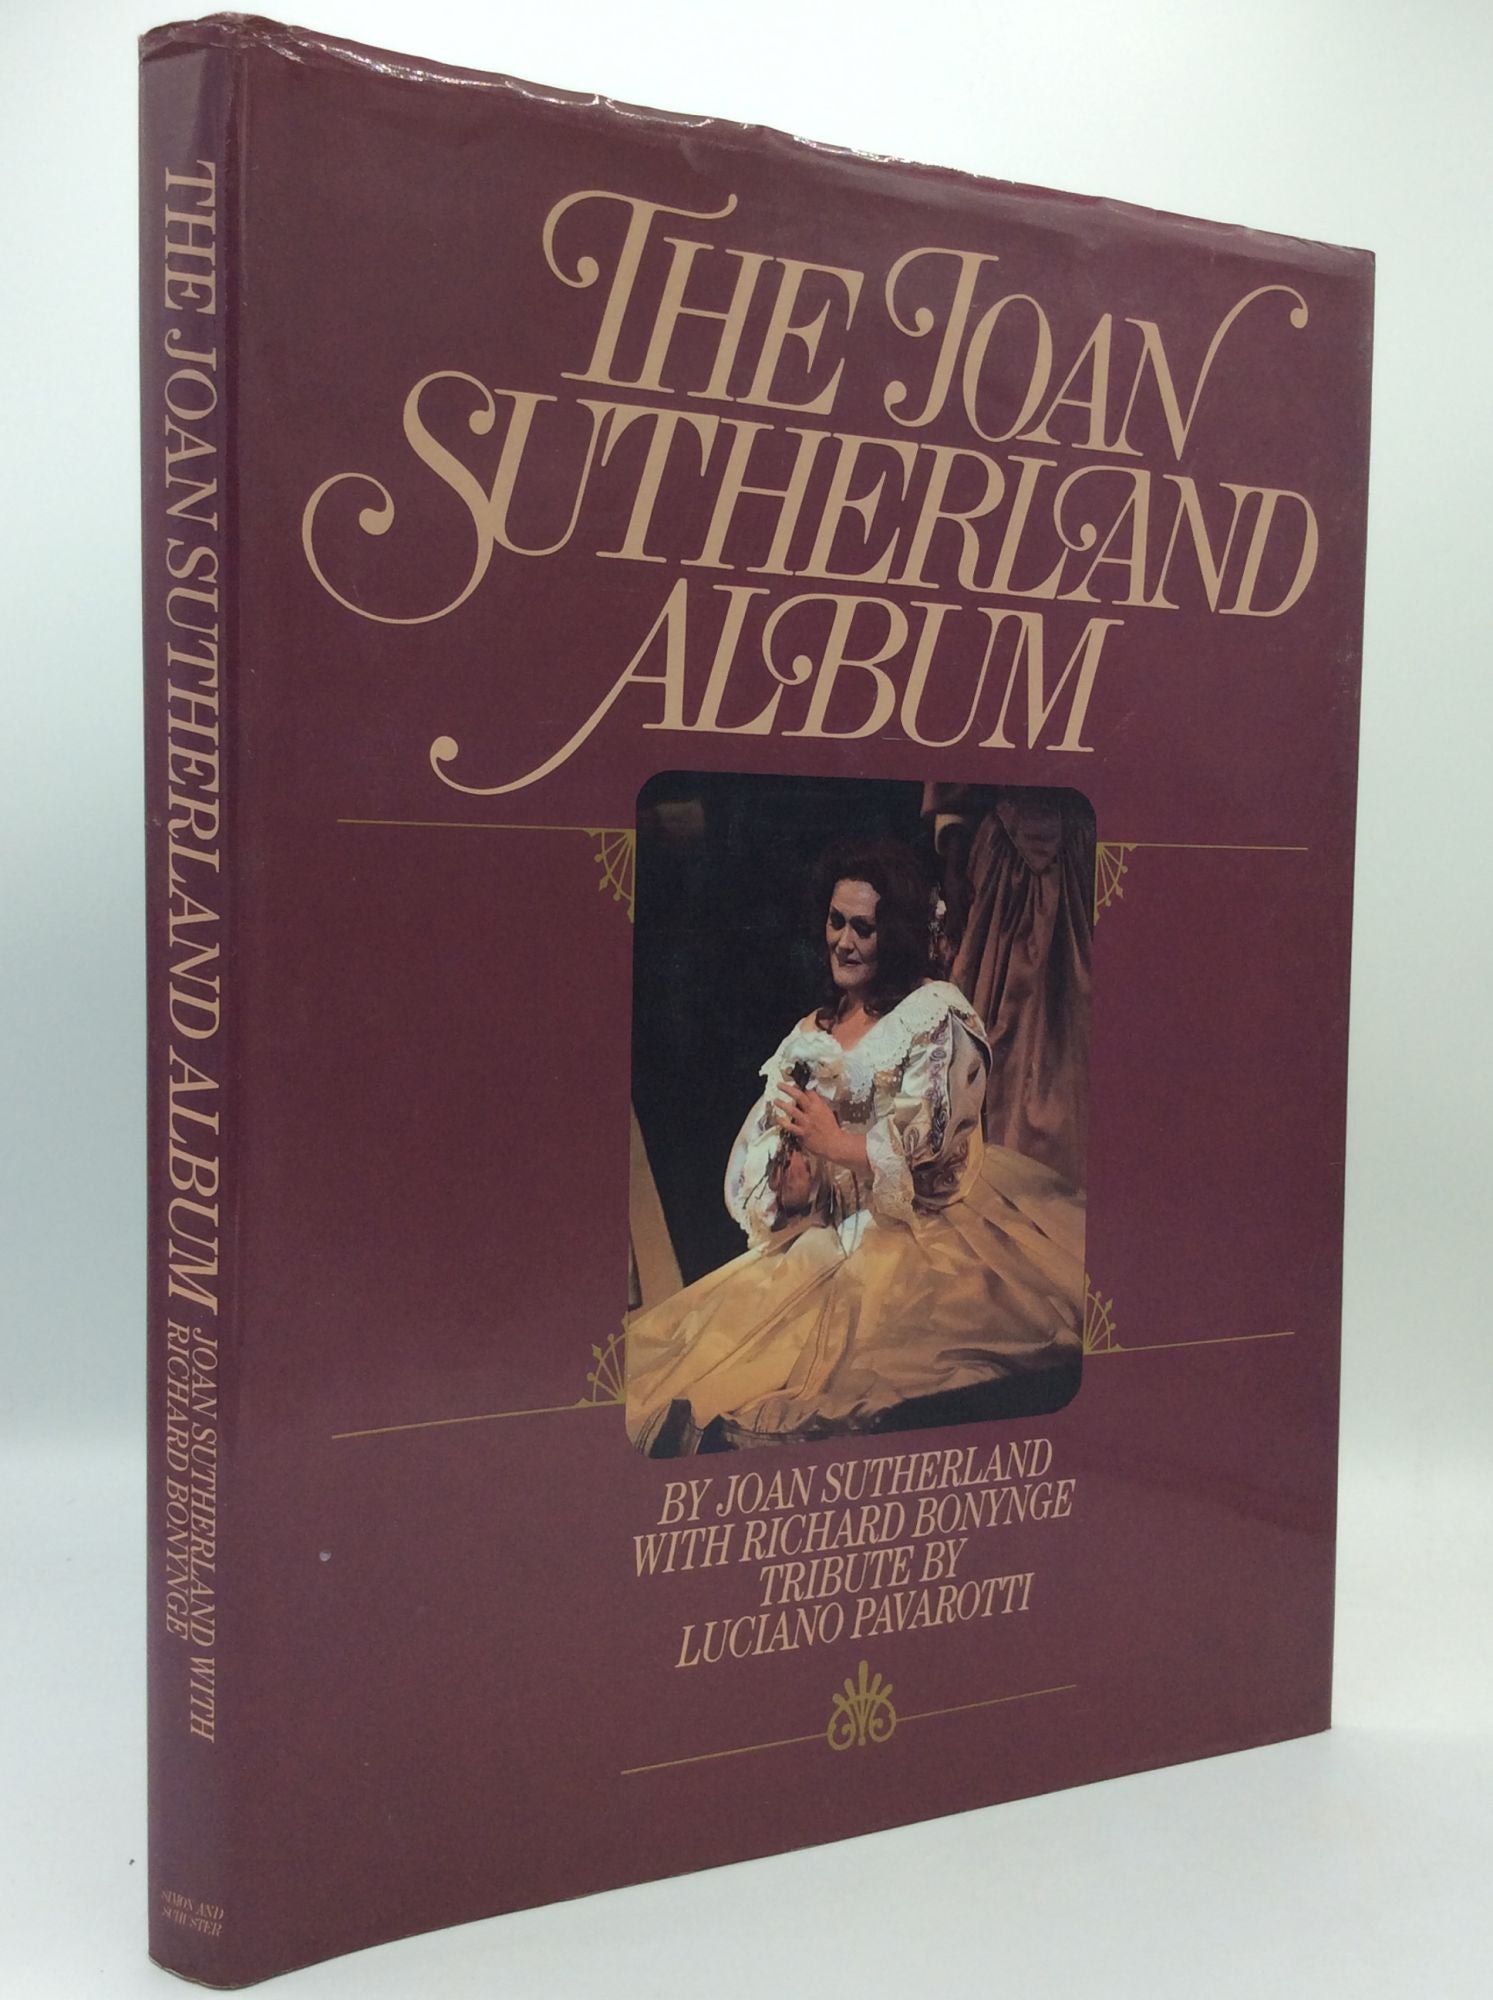 Joan Sutherland with Richard Bonynge - The Joan Sutherland Album